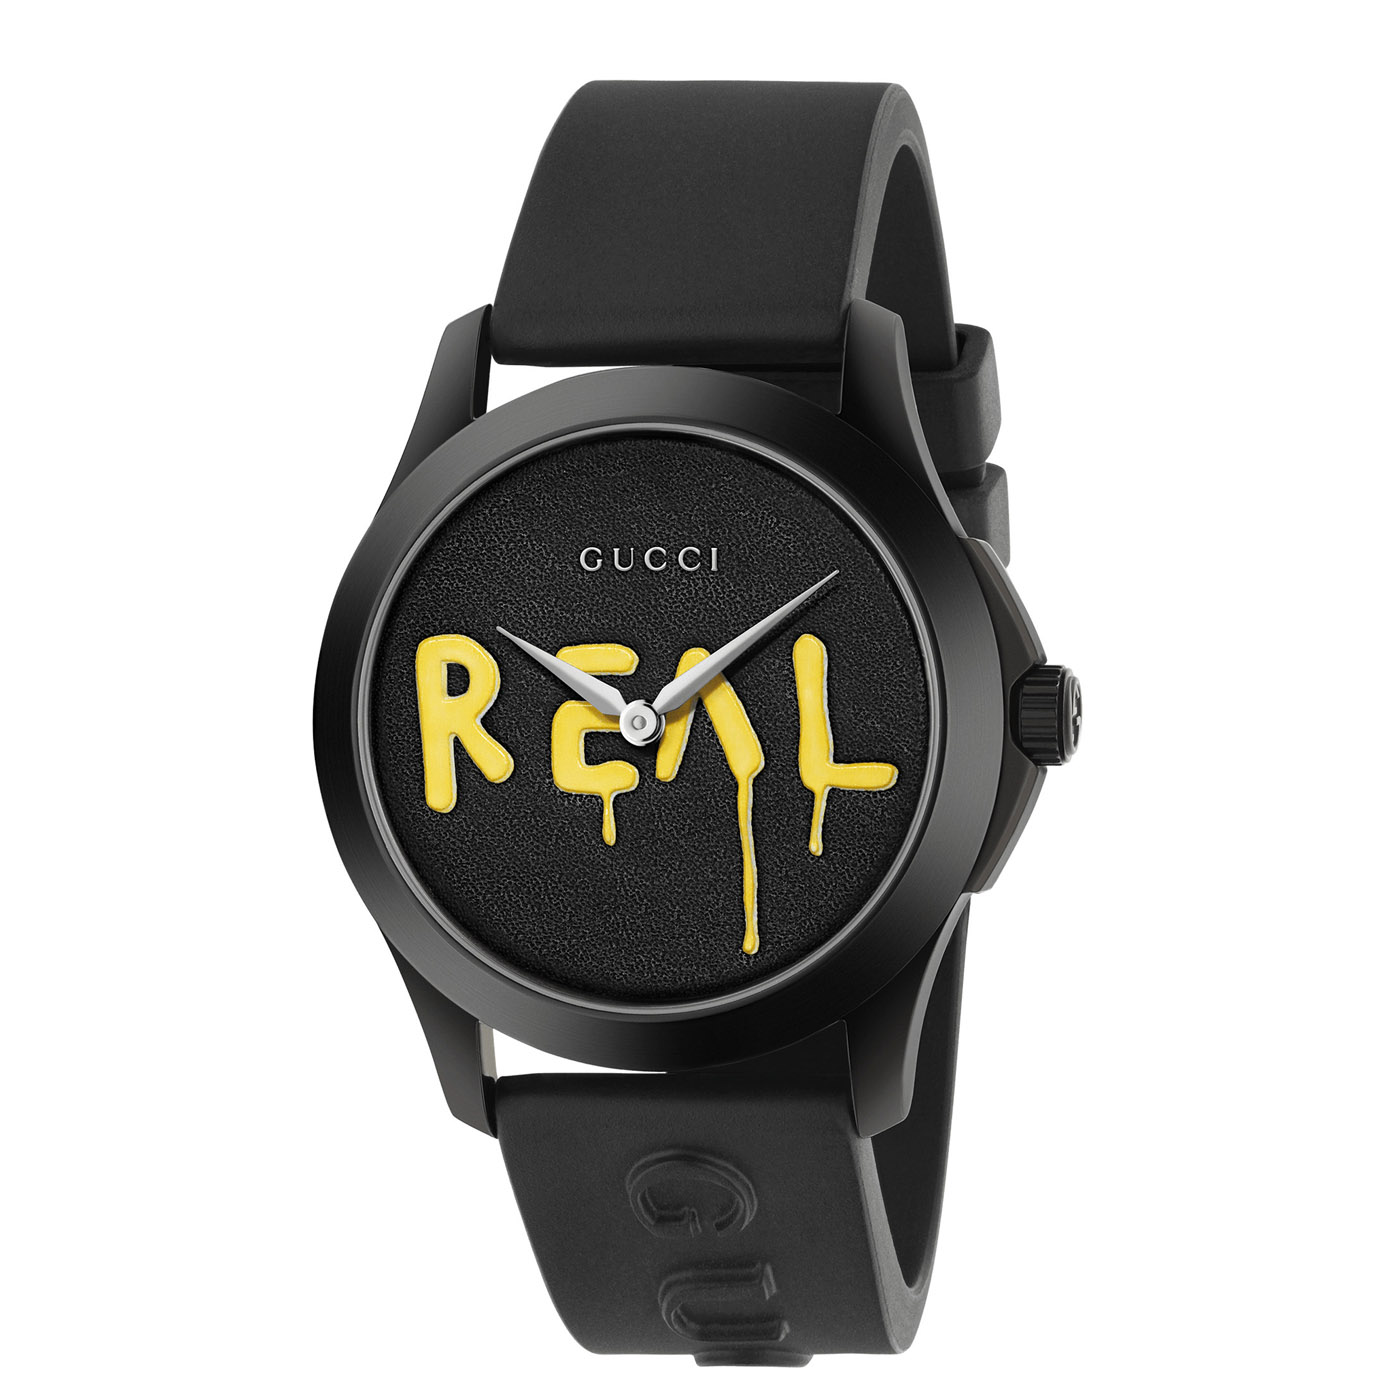 Reloj Gucci G-Timeless REAL - Gucci - G-Timeless - Fashion Show